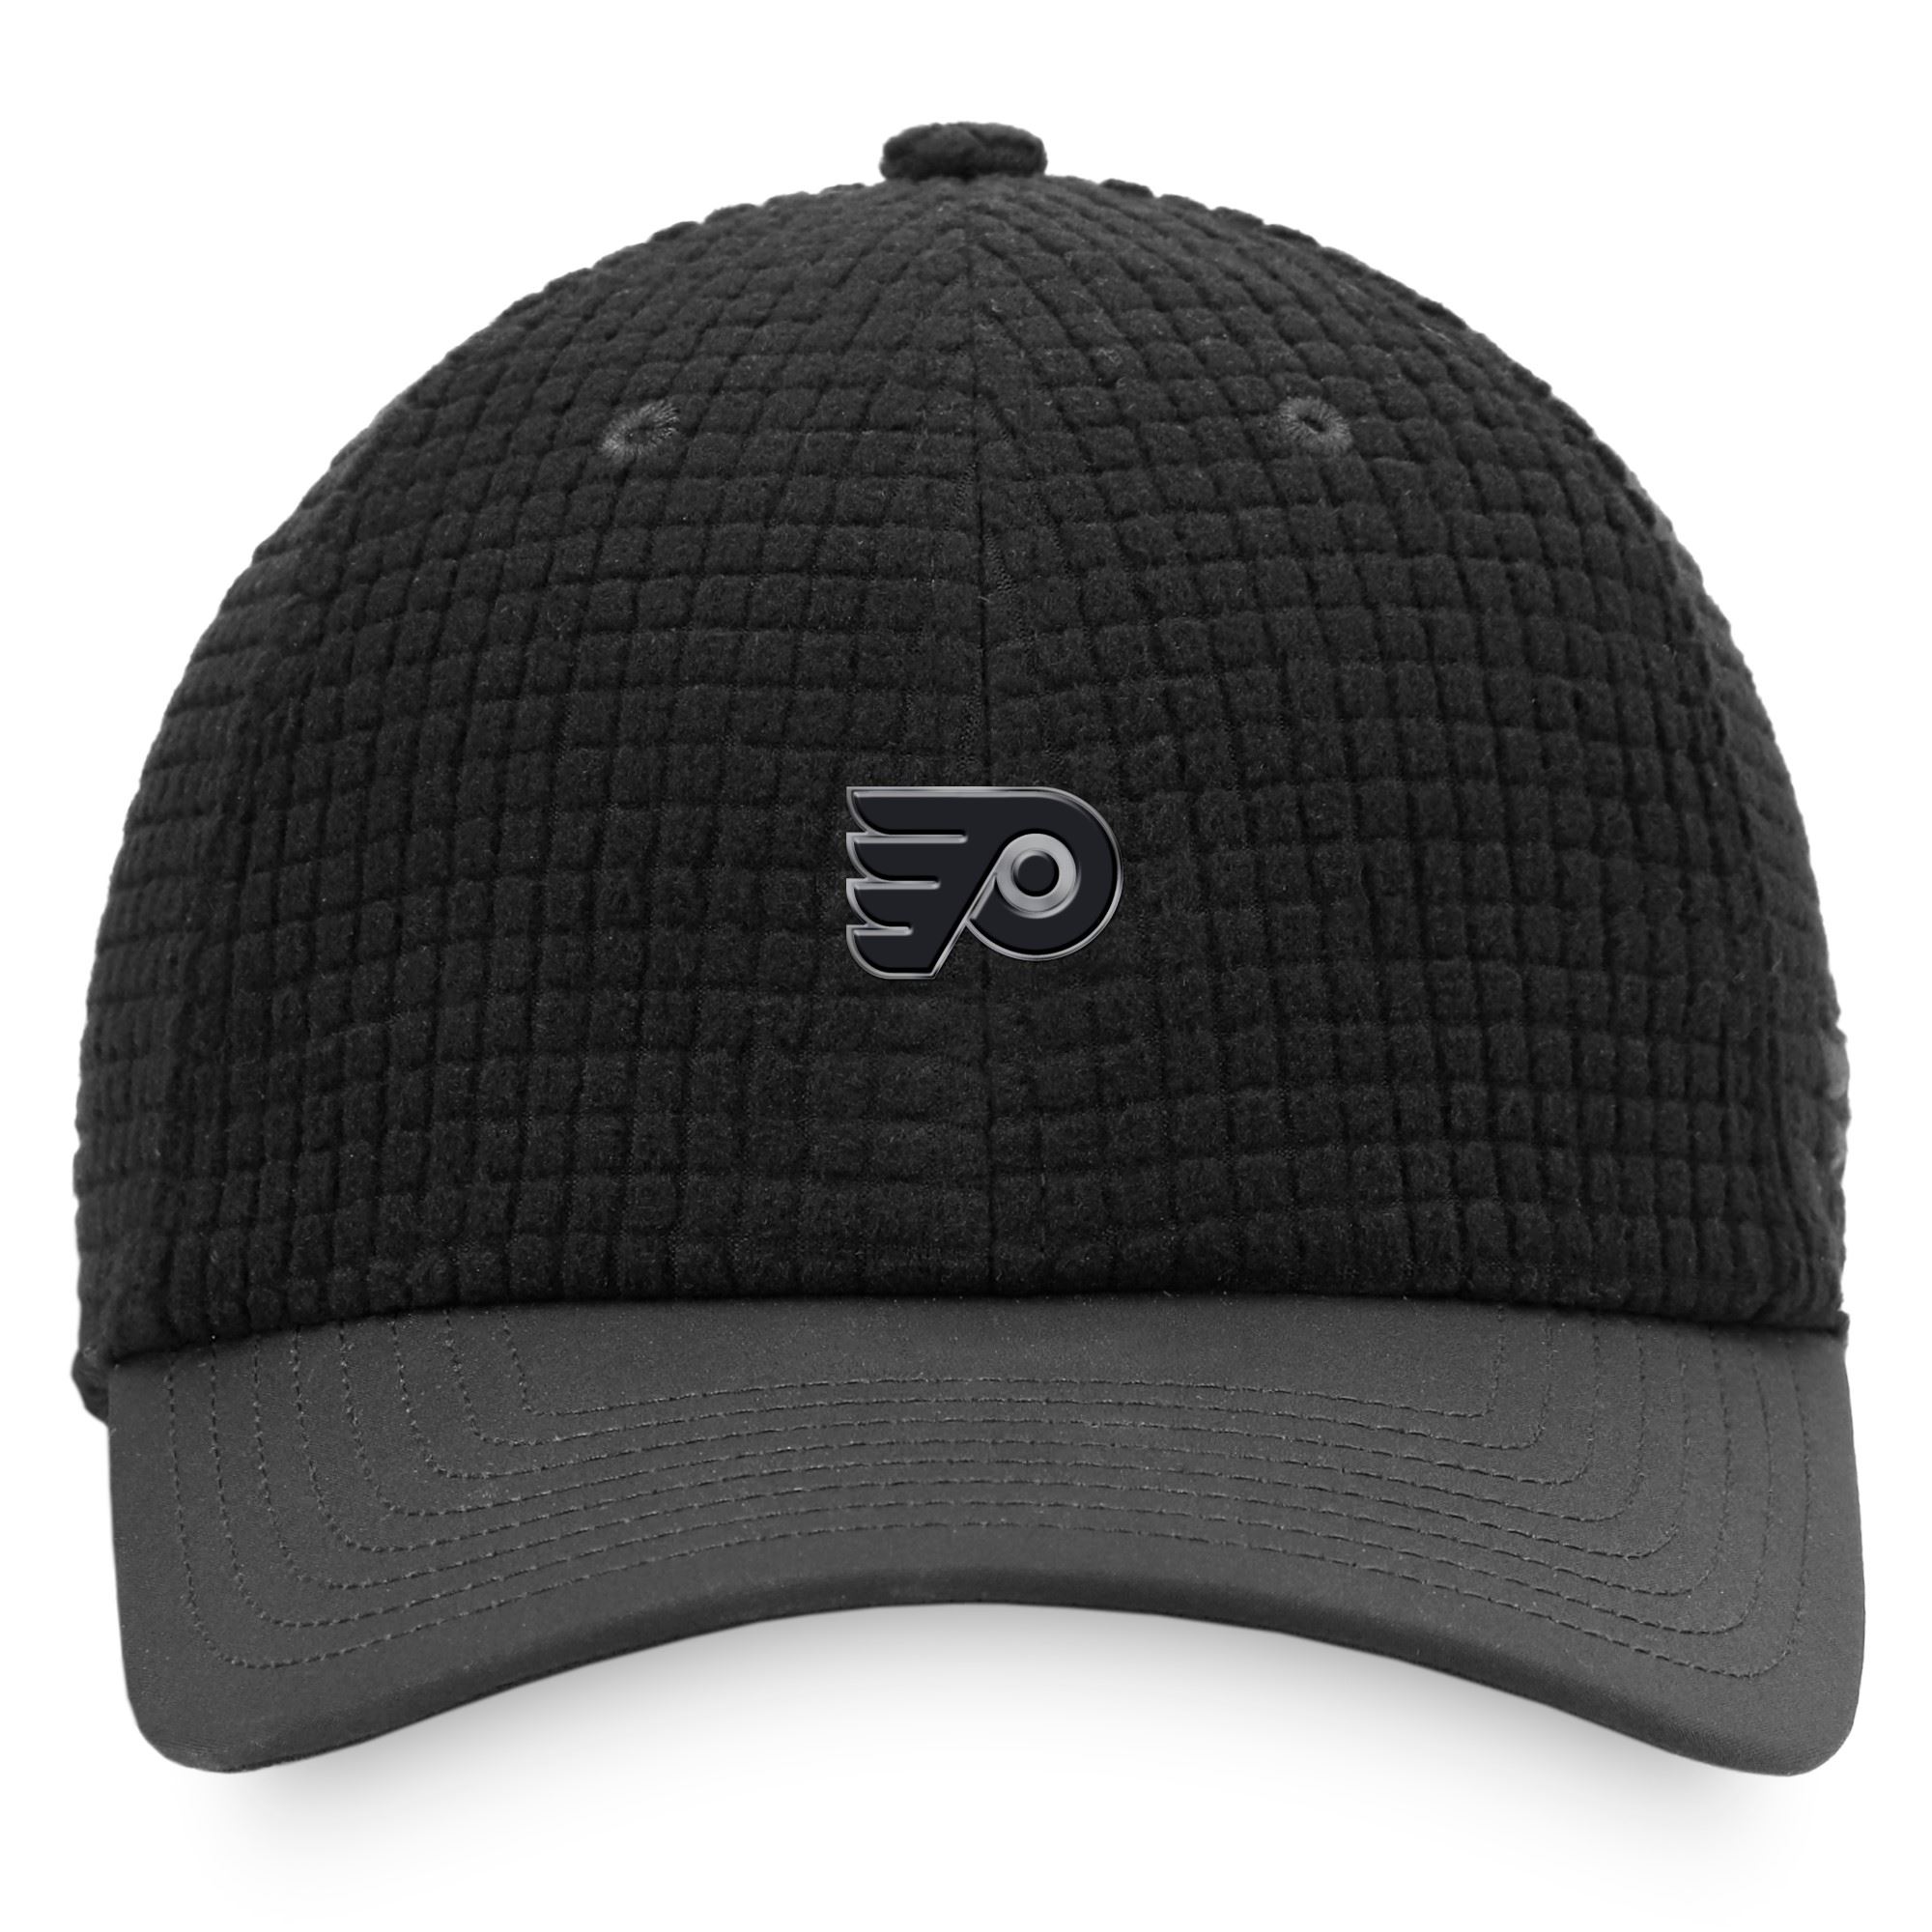 Philadelphia Flyers NHL Authentic Pro Black Ice Unstructured Snapback Cap Fanatics